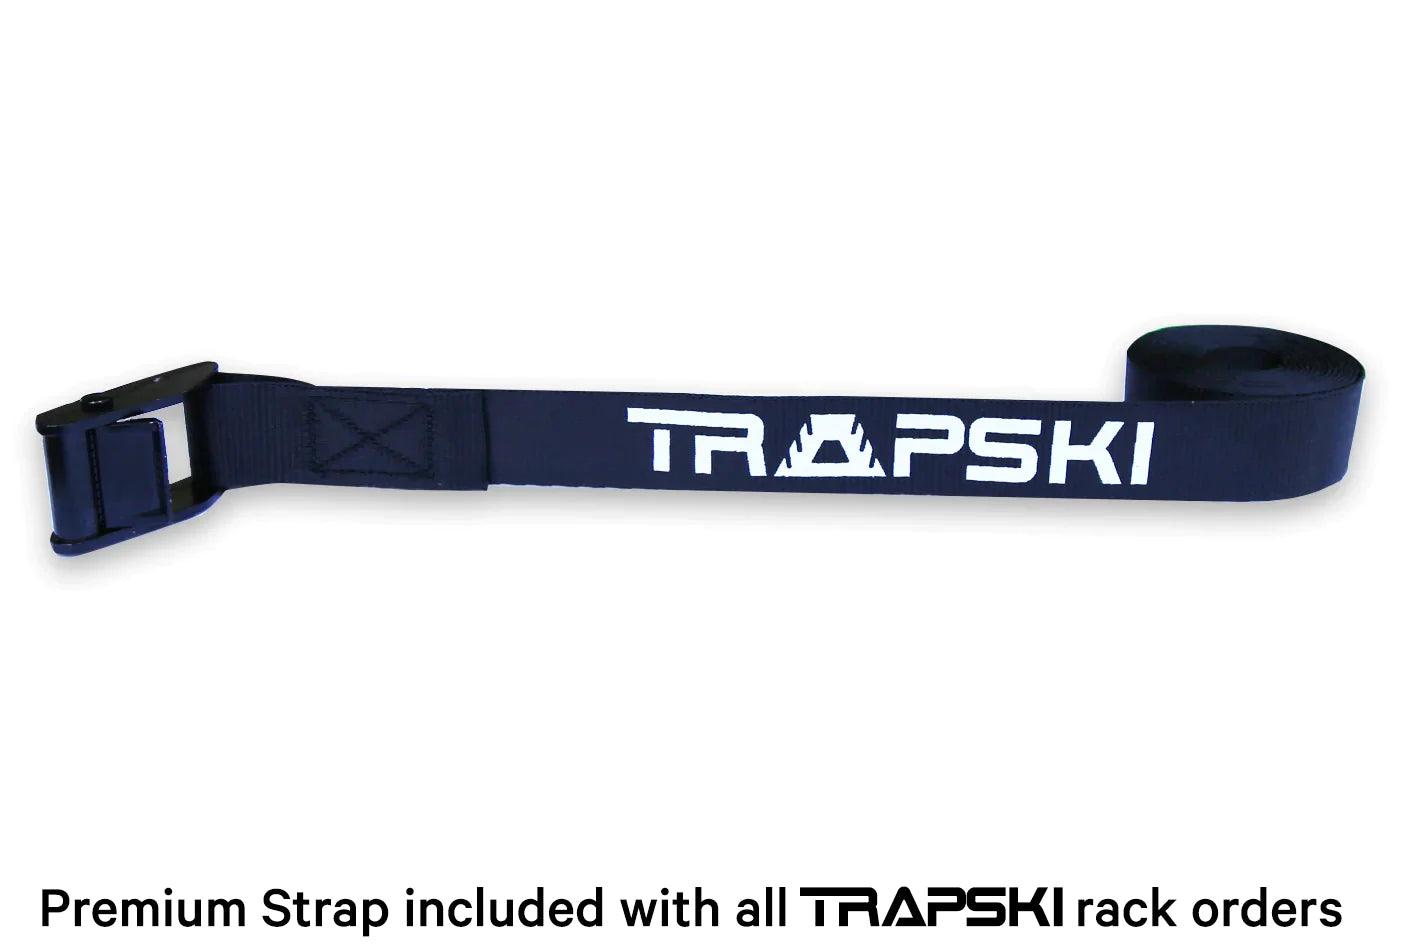 TRAPSKI QUAD Wide Stance Snowboard Rack